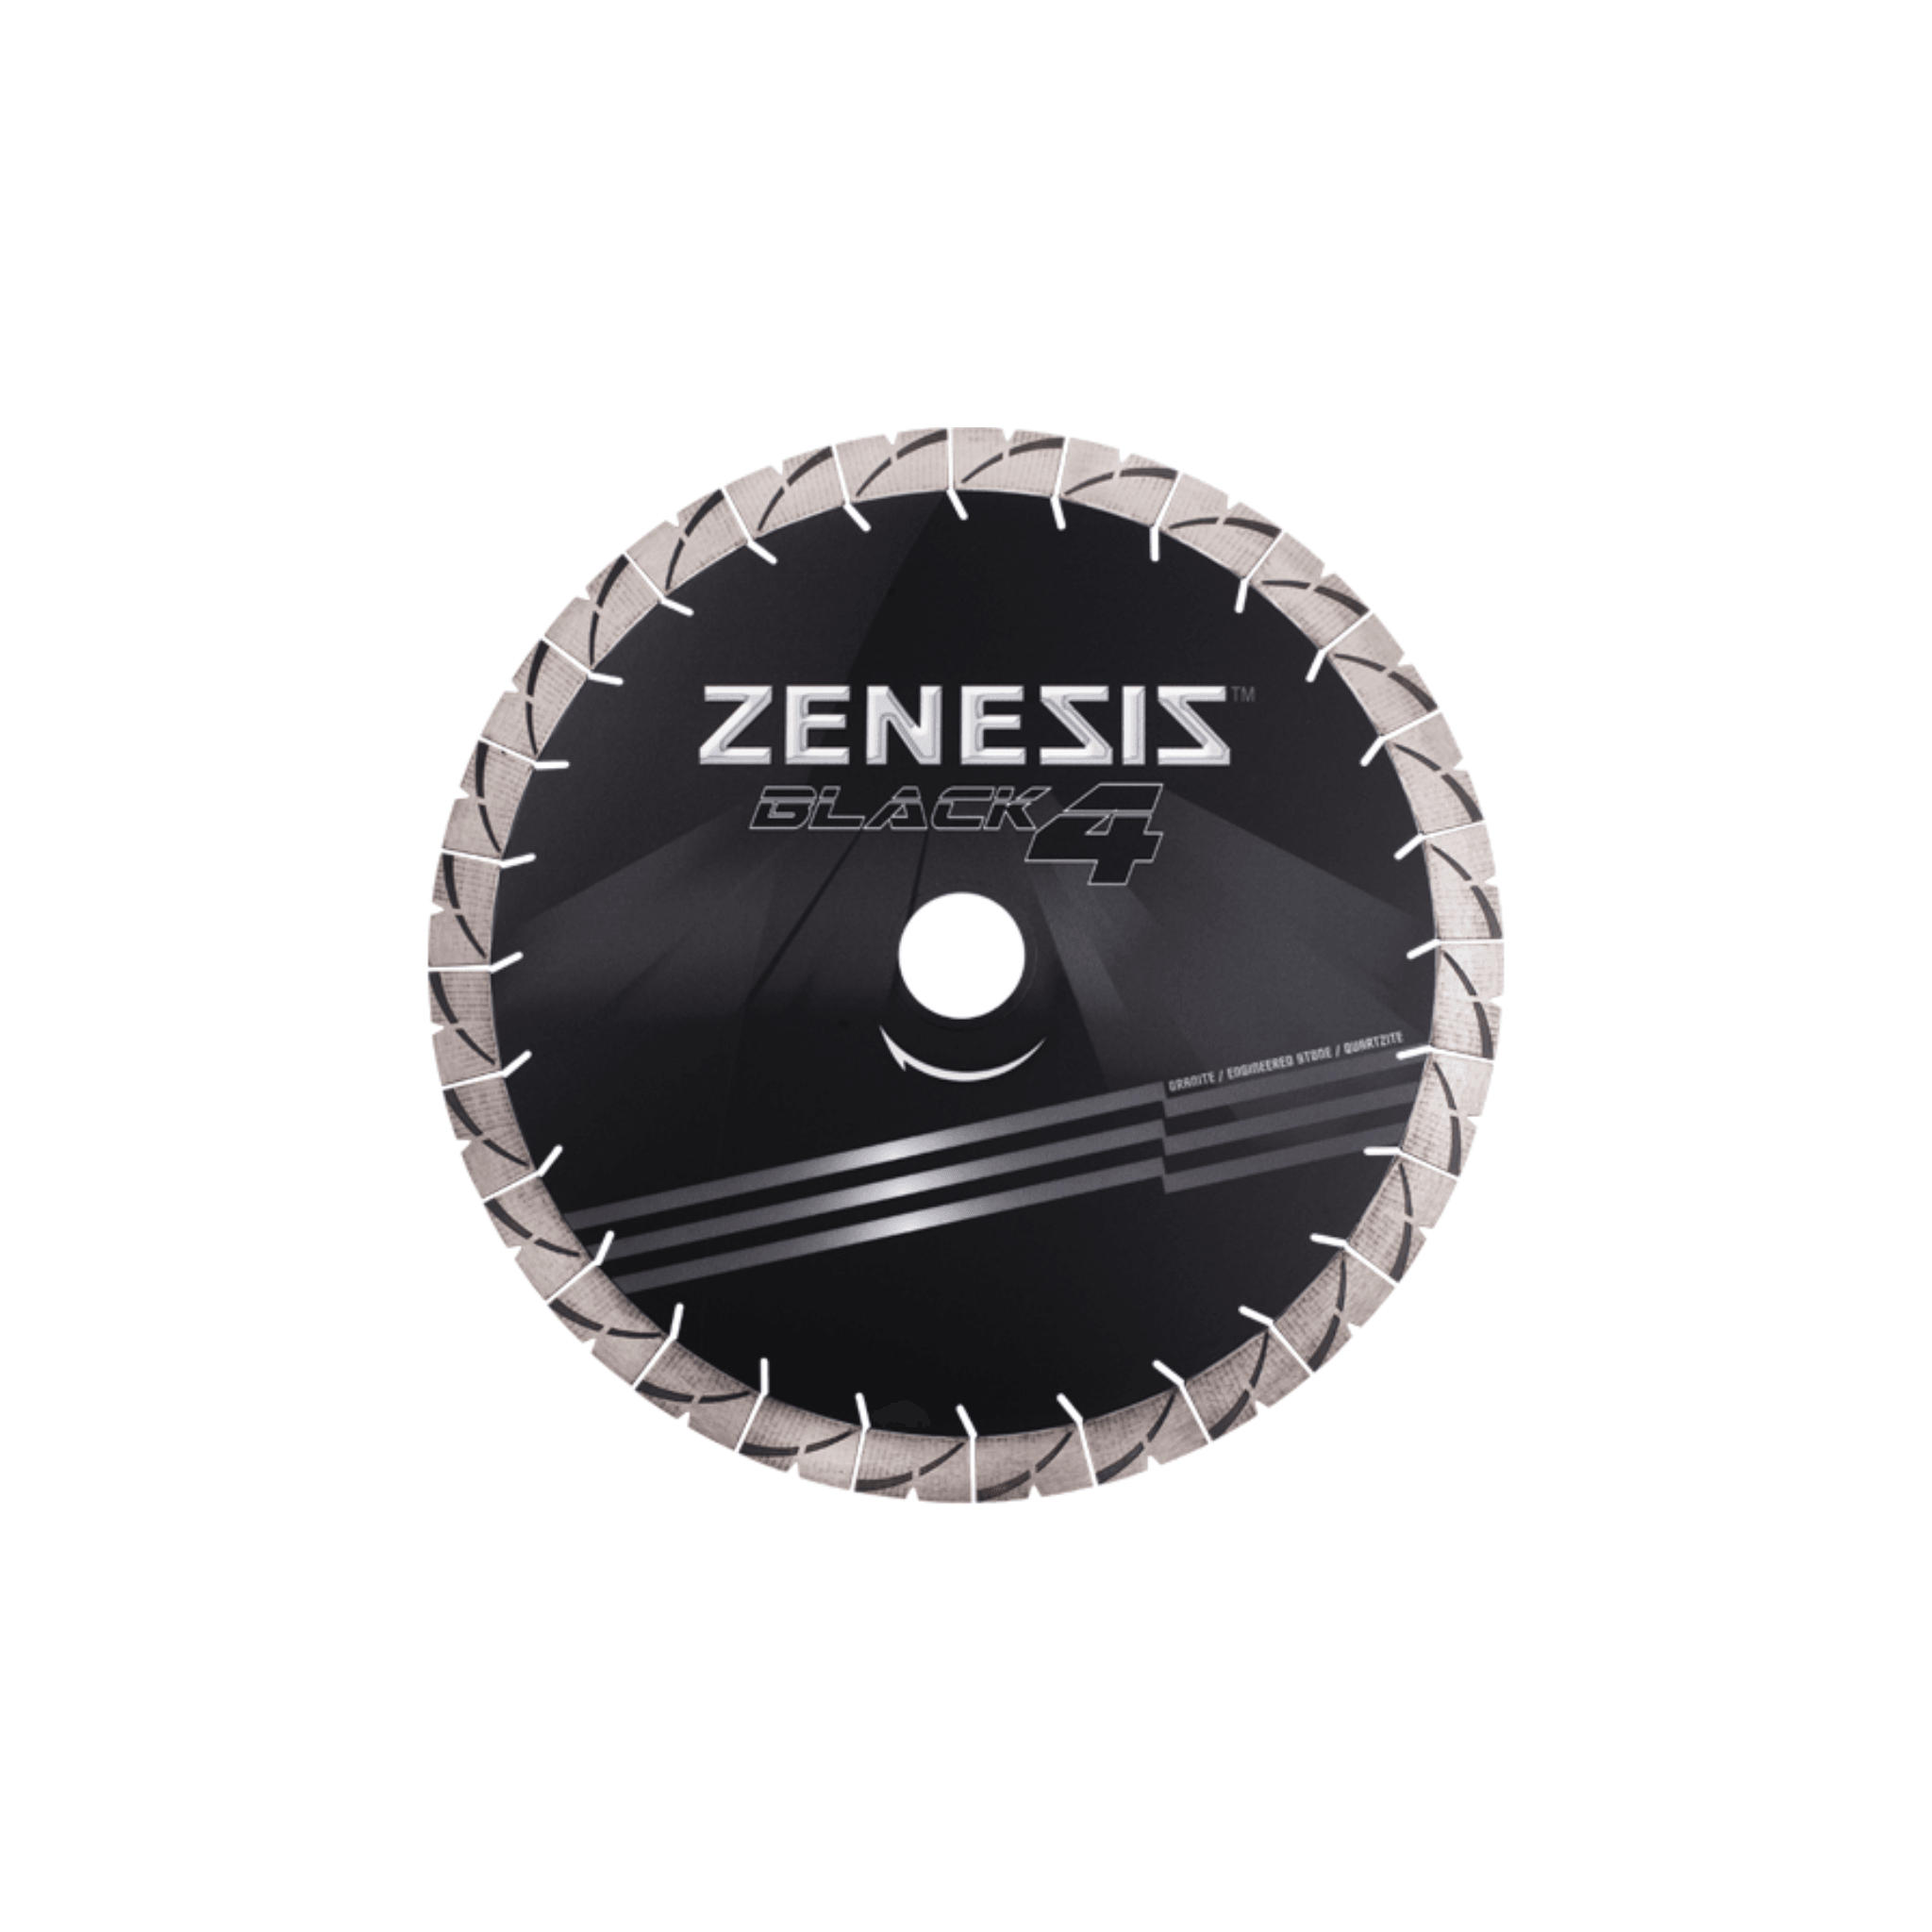 ZENESIS™ Black 4 Blade 18" - Direct Stone Tool Supply, Inc